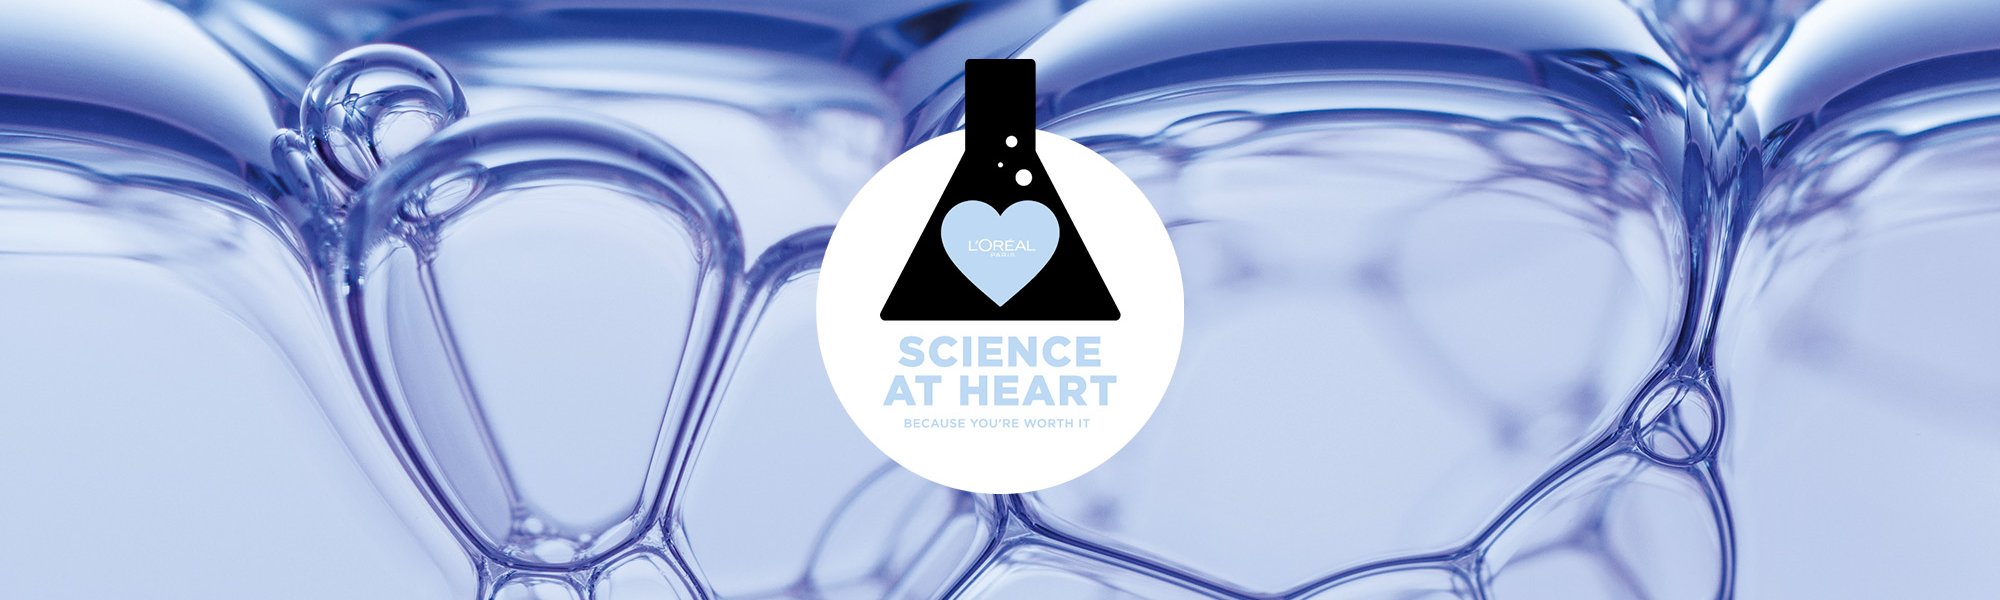 New Science At Heart Hero